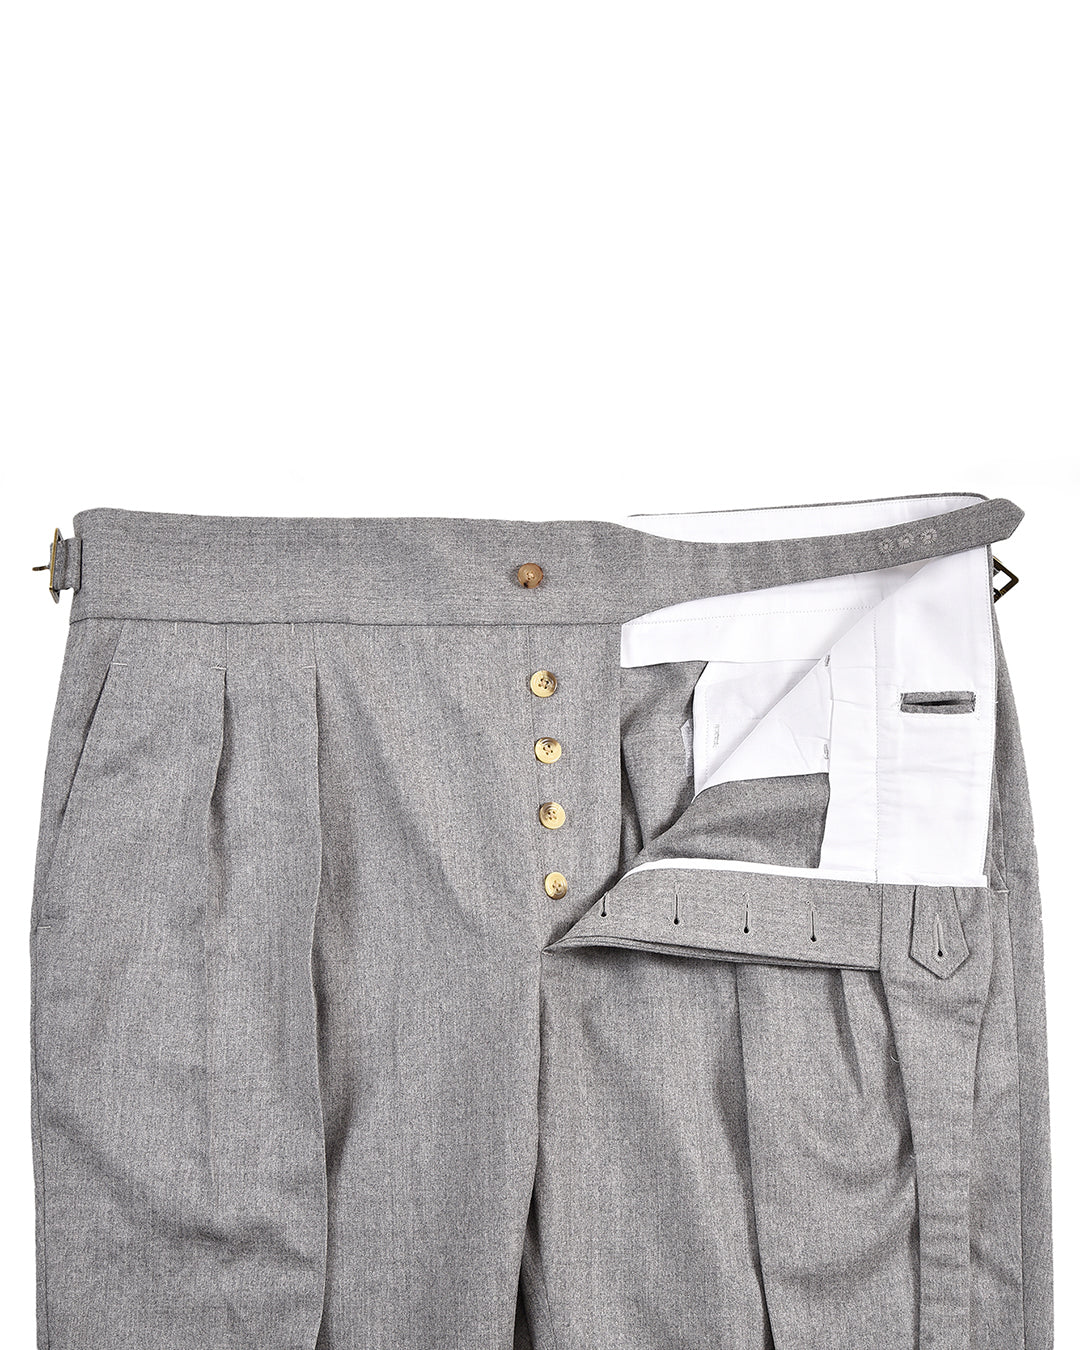 Front open view of Gurkha Pant in Vitale Barberis Canonico Flannels Light Grey